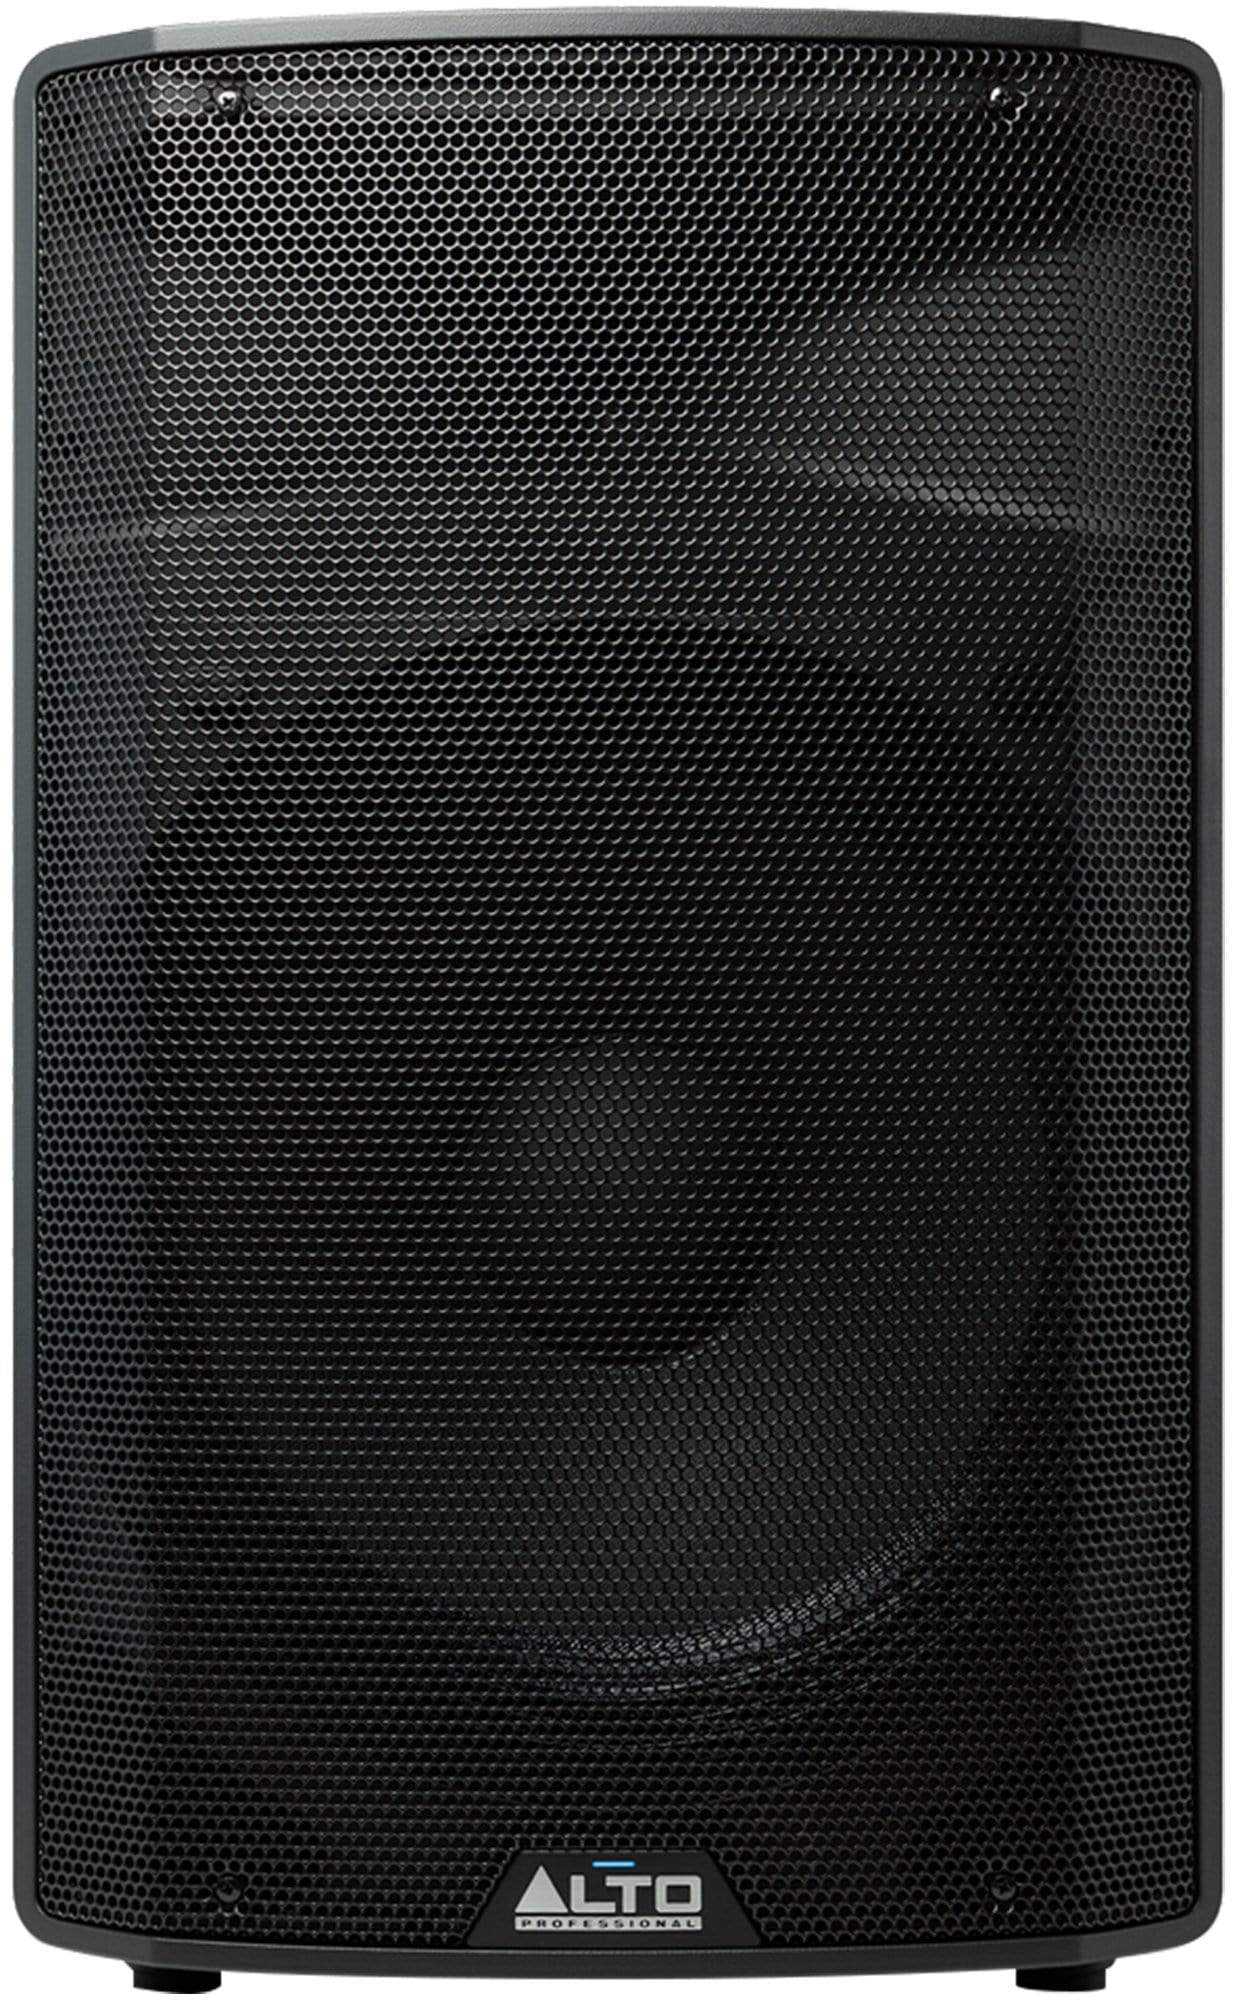 Alto TX315 2-Way 15-Inch 700W Powered Speaker - ProSound and Stage Lighting